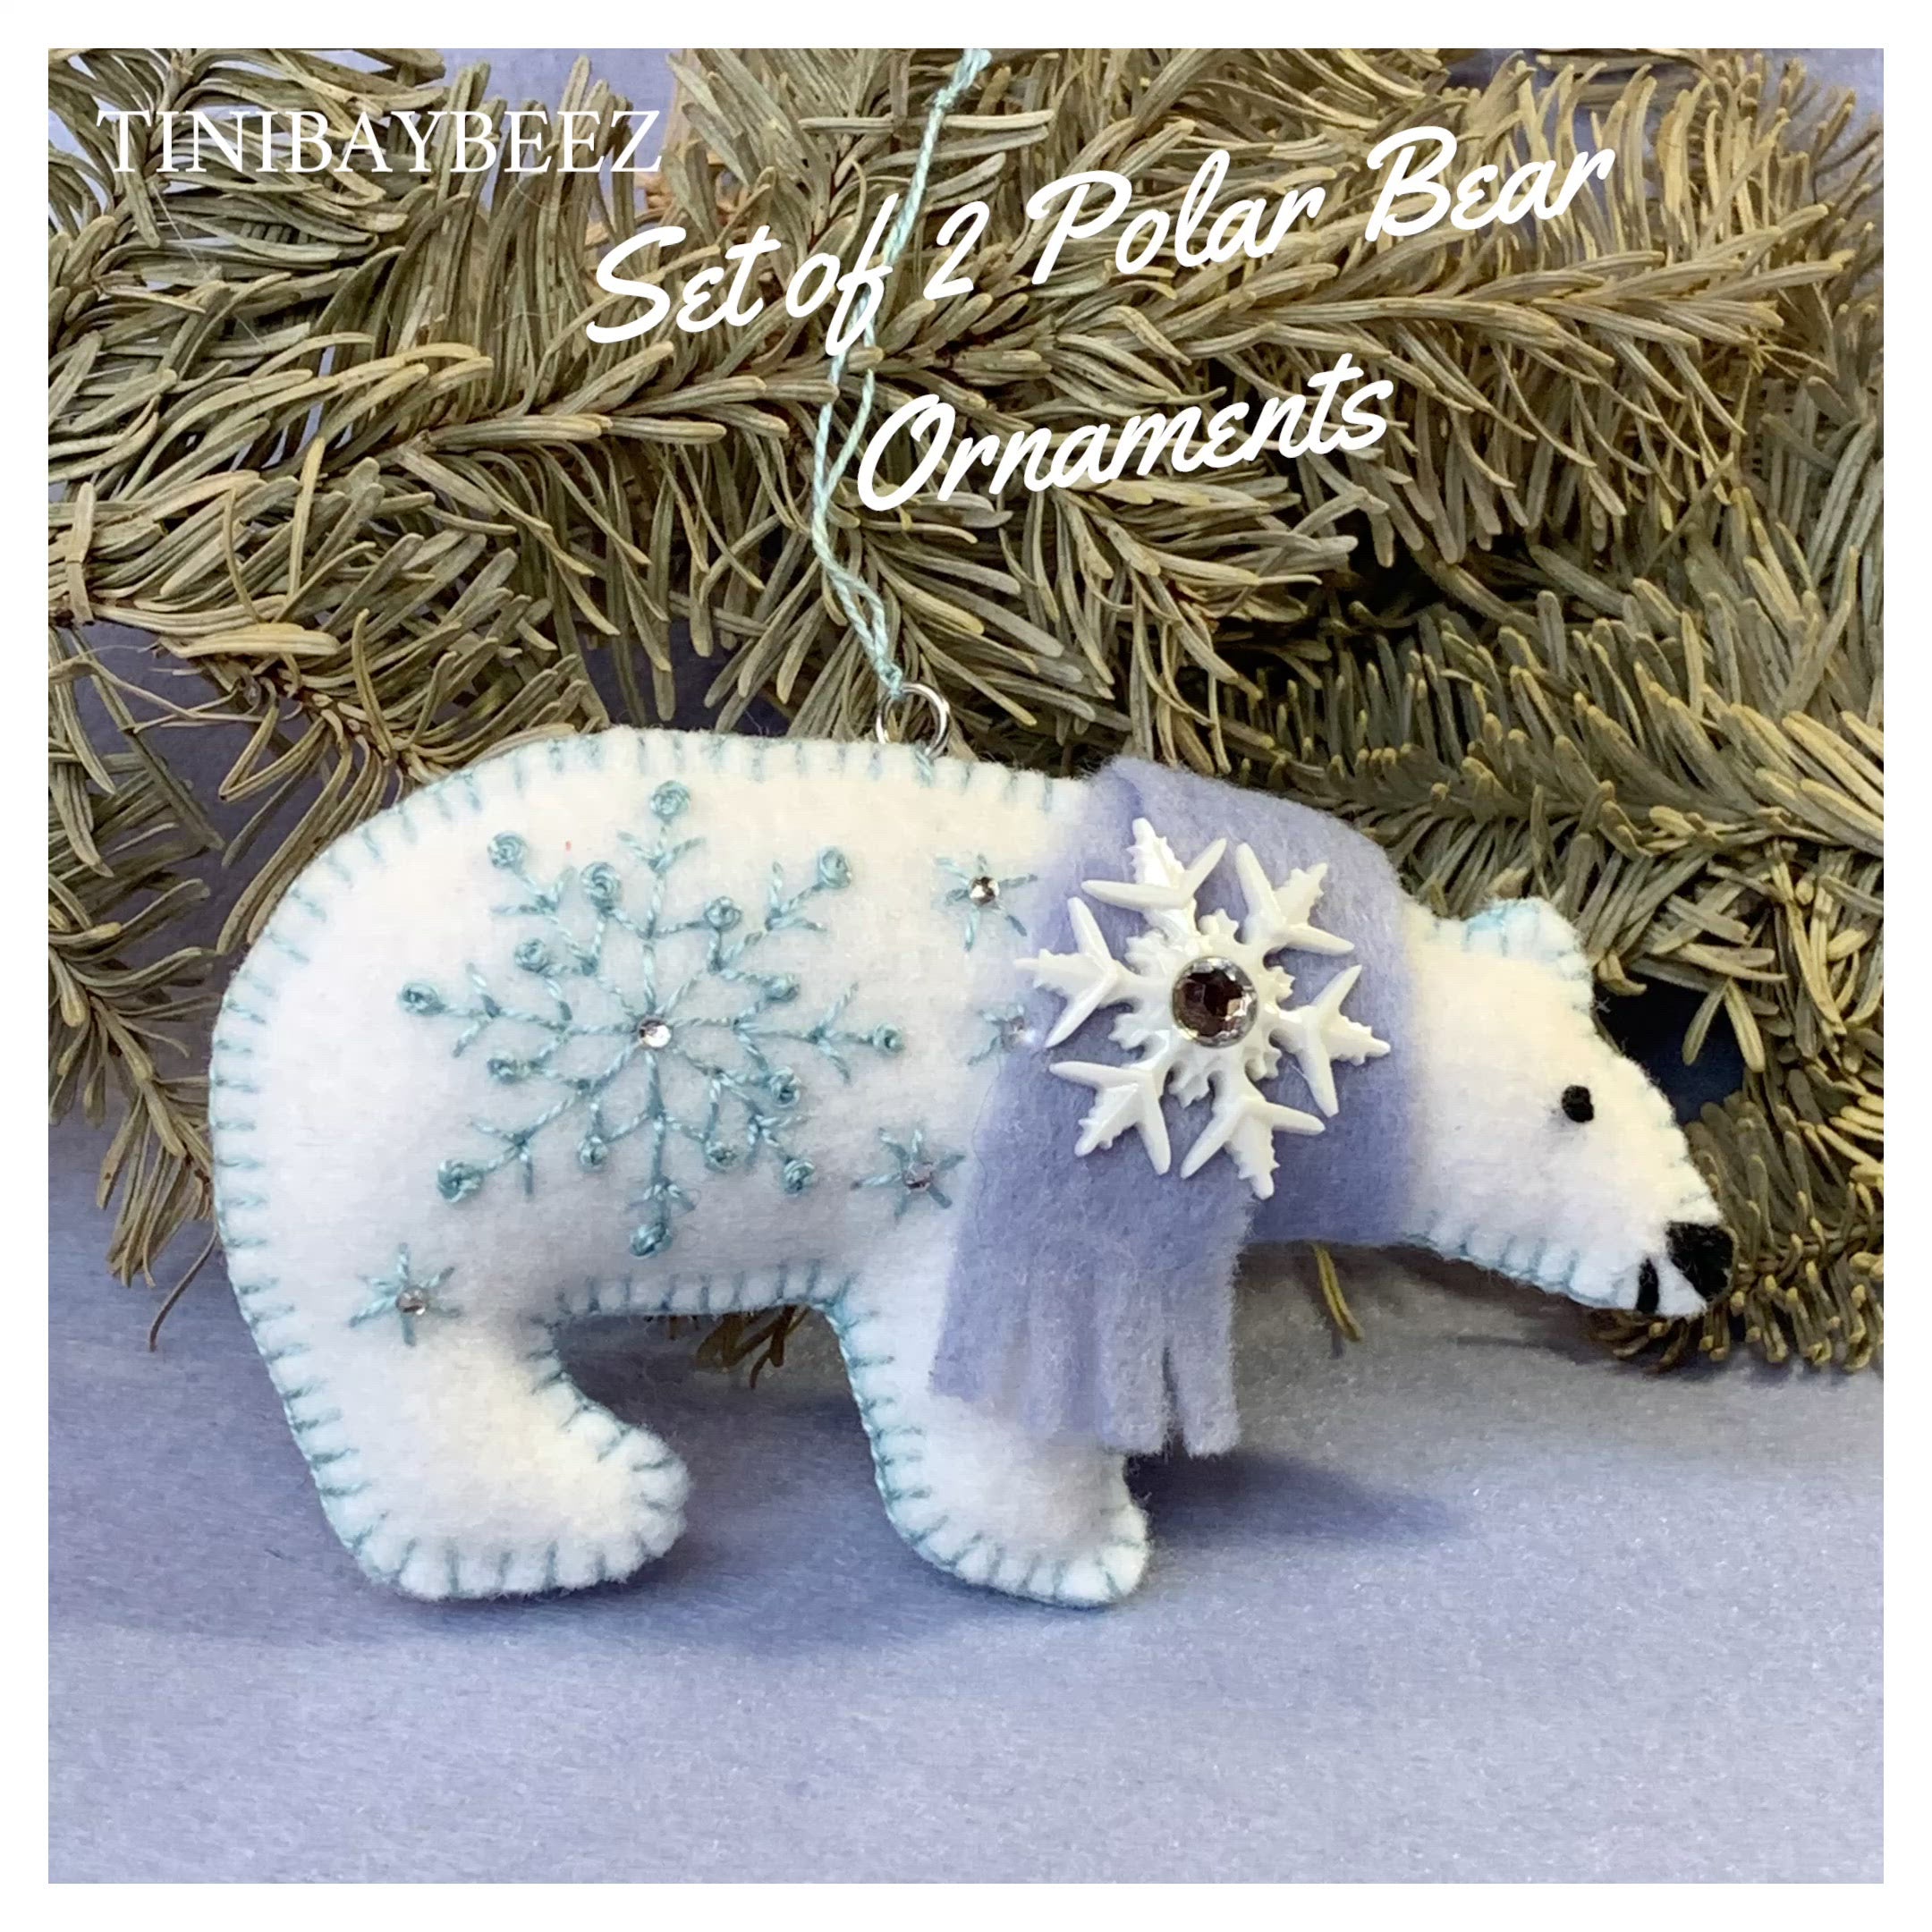 Polar Bear Ornament-Embroidered Felt Polar Bear Cub Ornaments Set of 2 with Rhinestone and Snowflake Accents